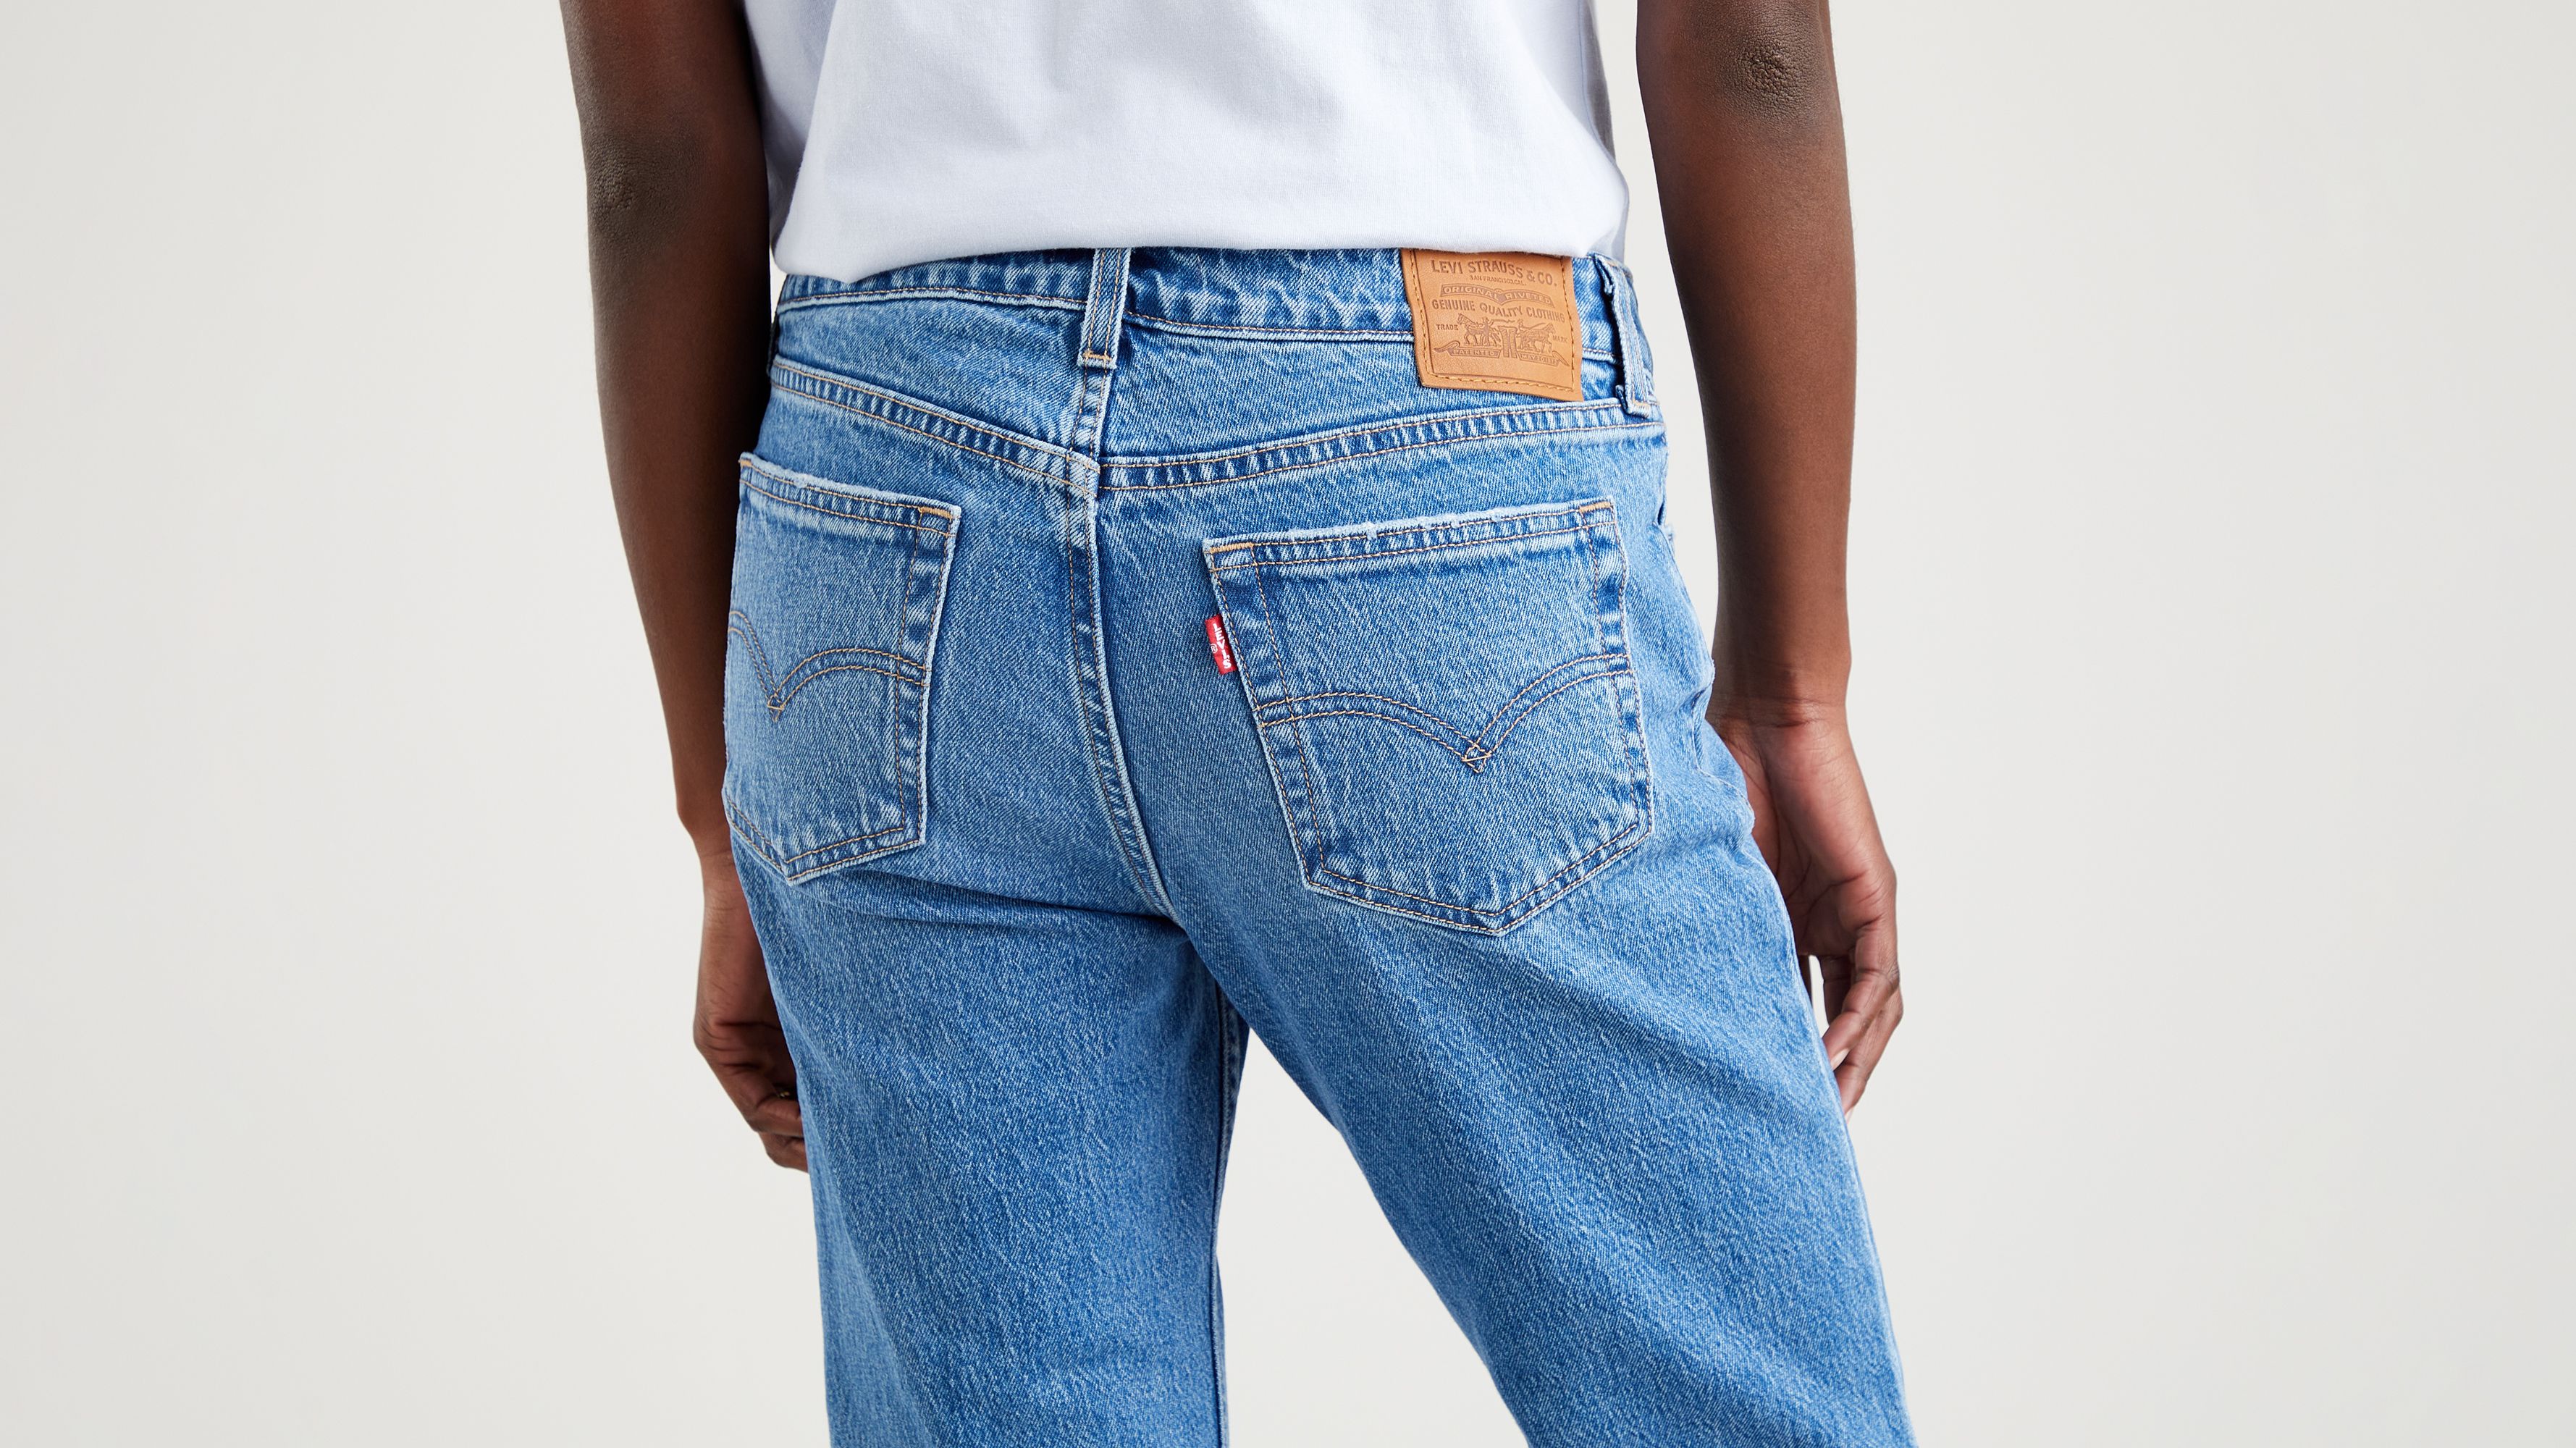 Jeans, Denim & Clothing